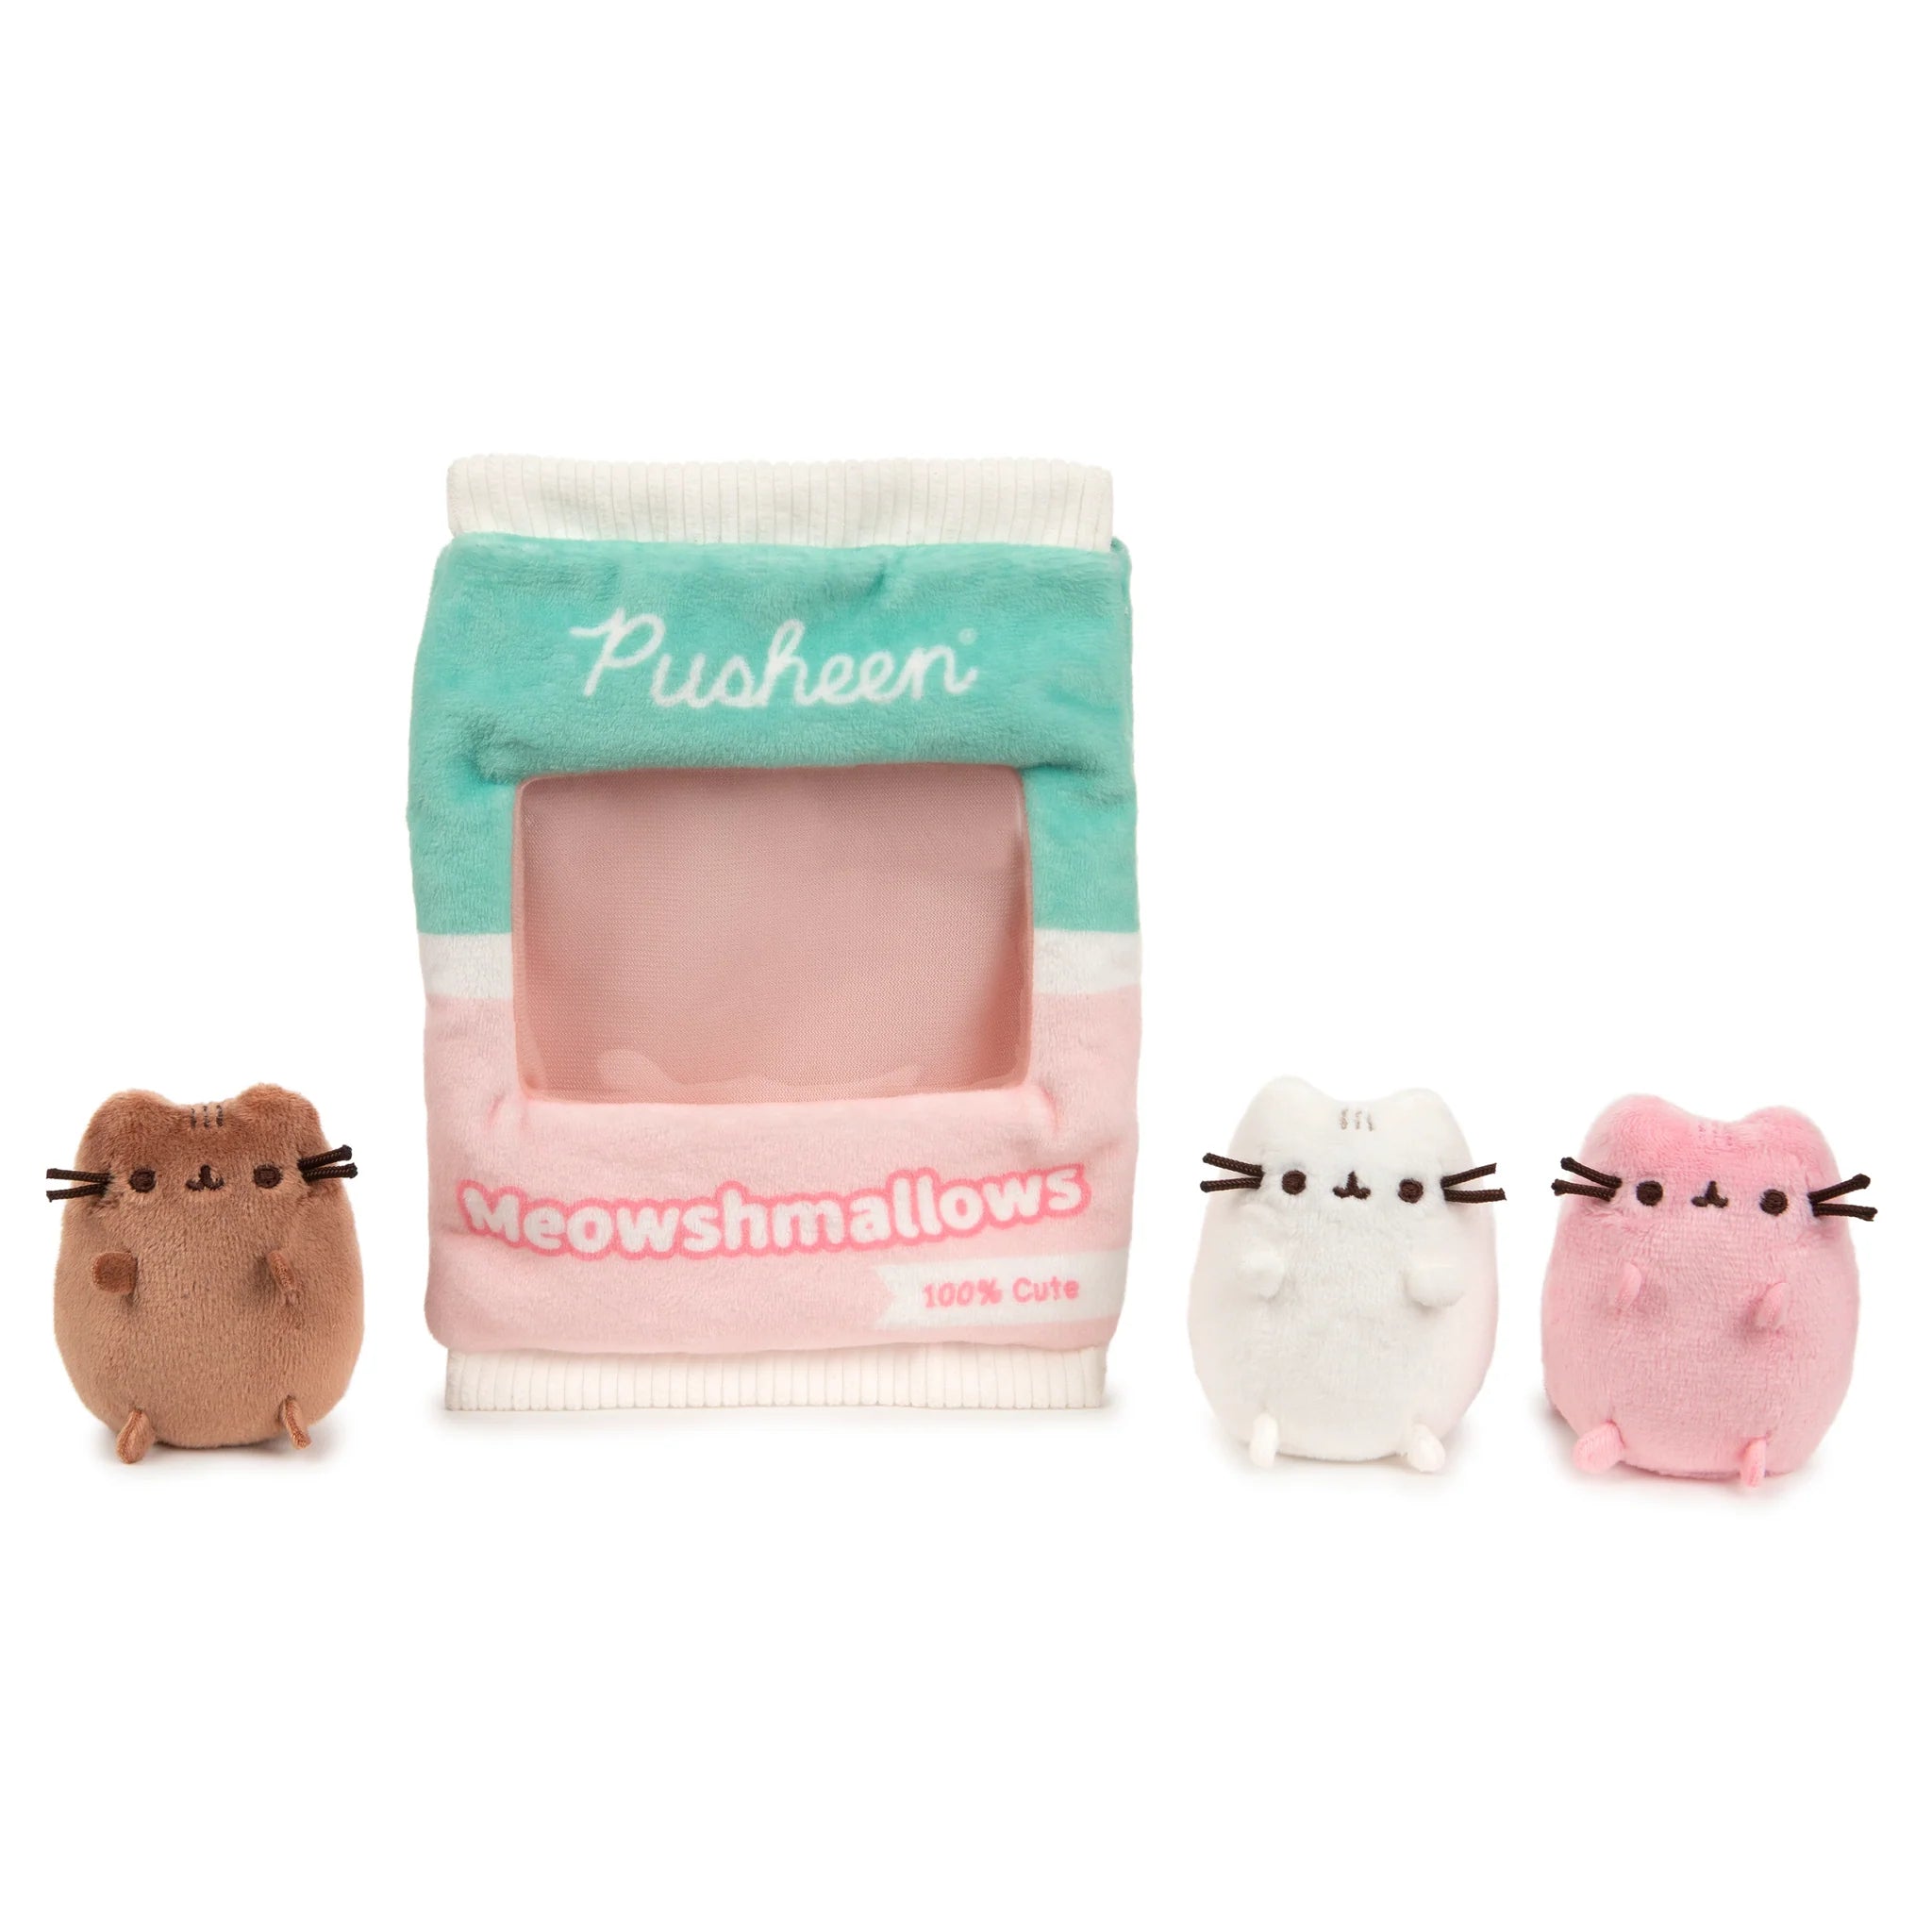 Gund-Pusheen Meowshmallows with Removable Mini Plush - 7.5